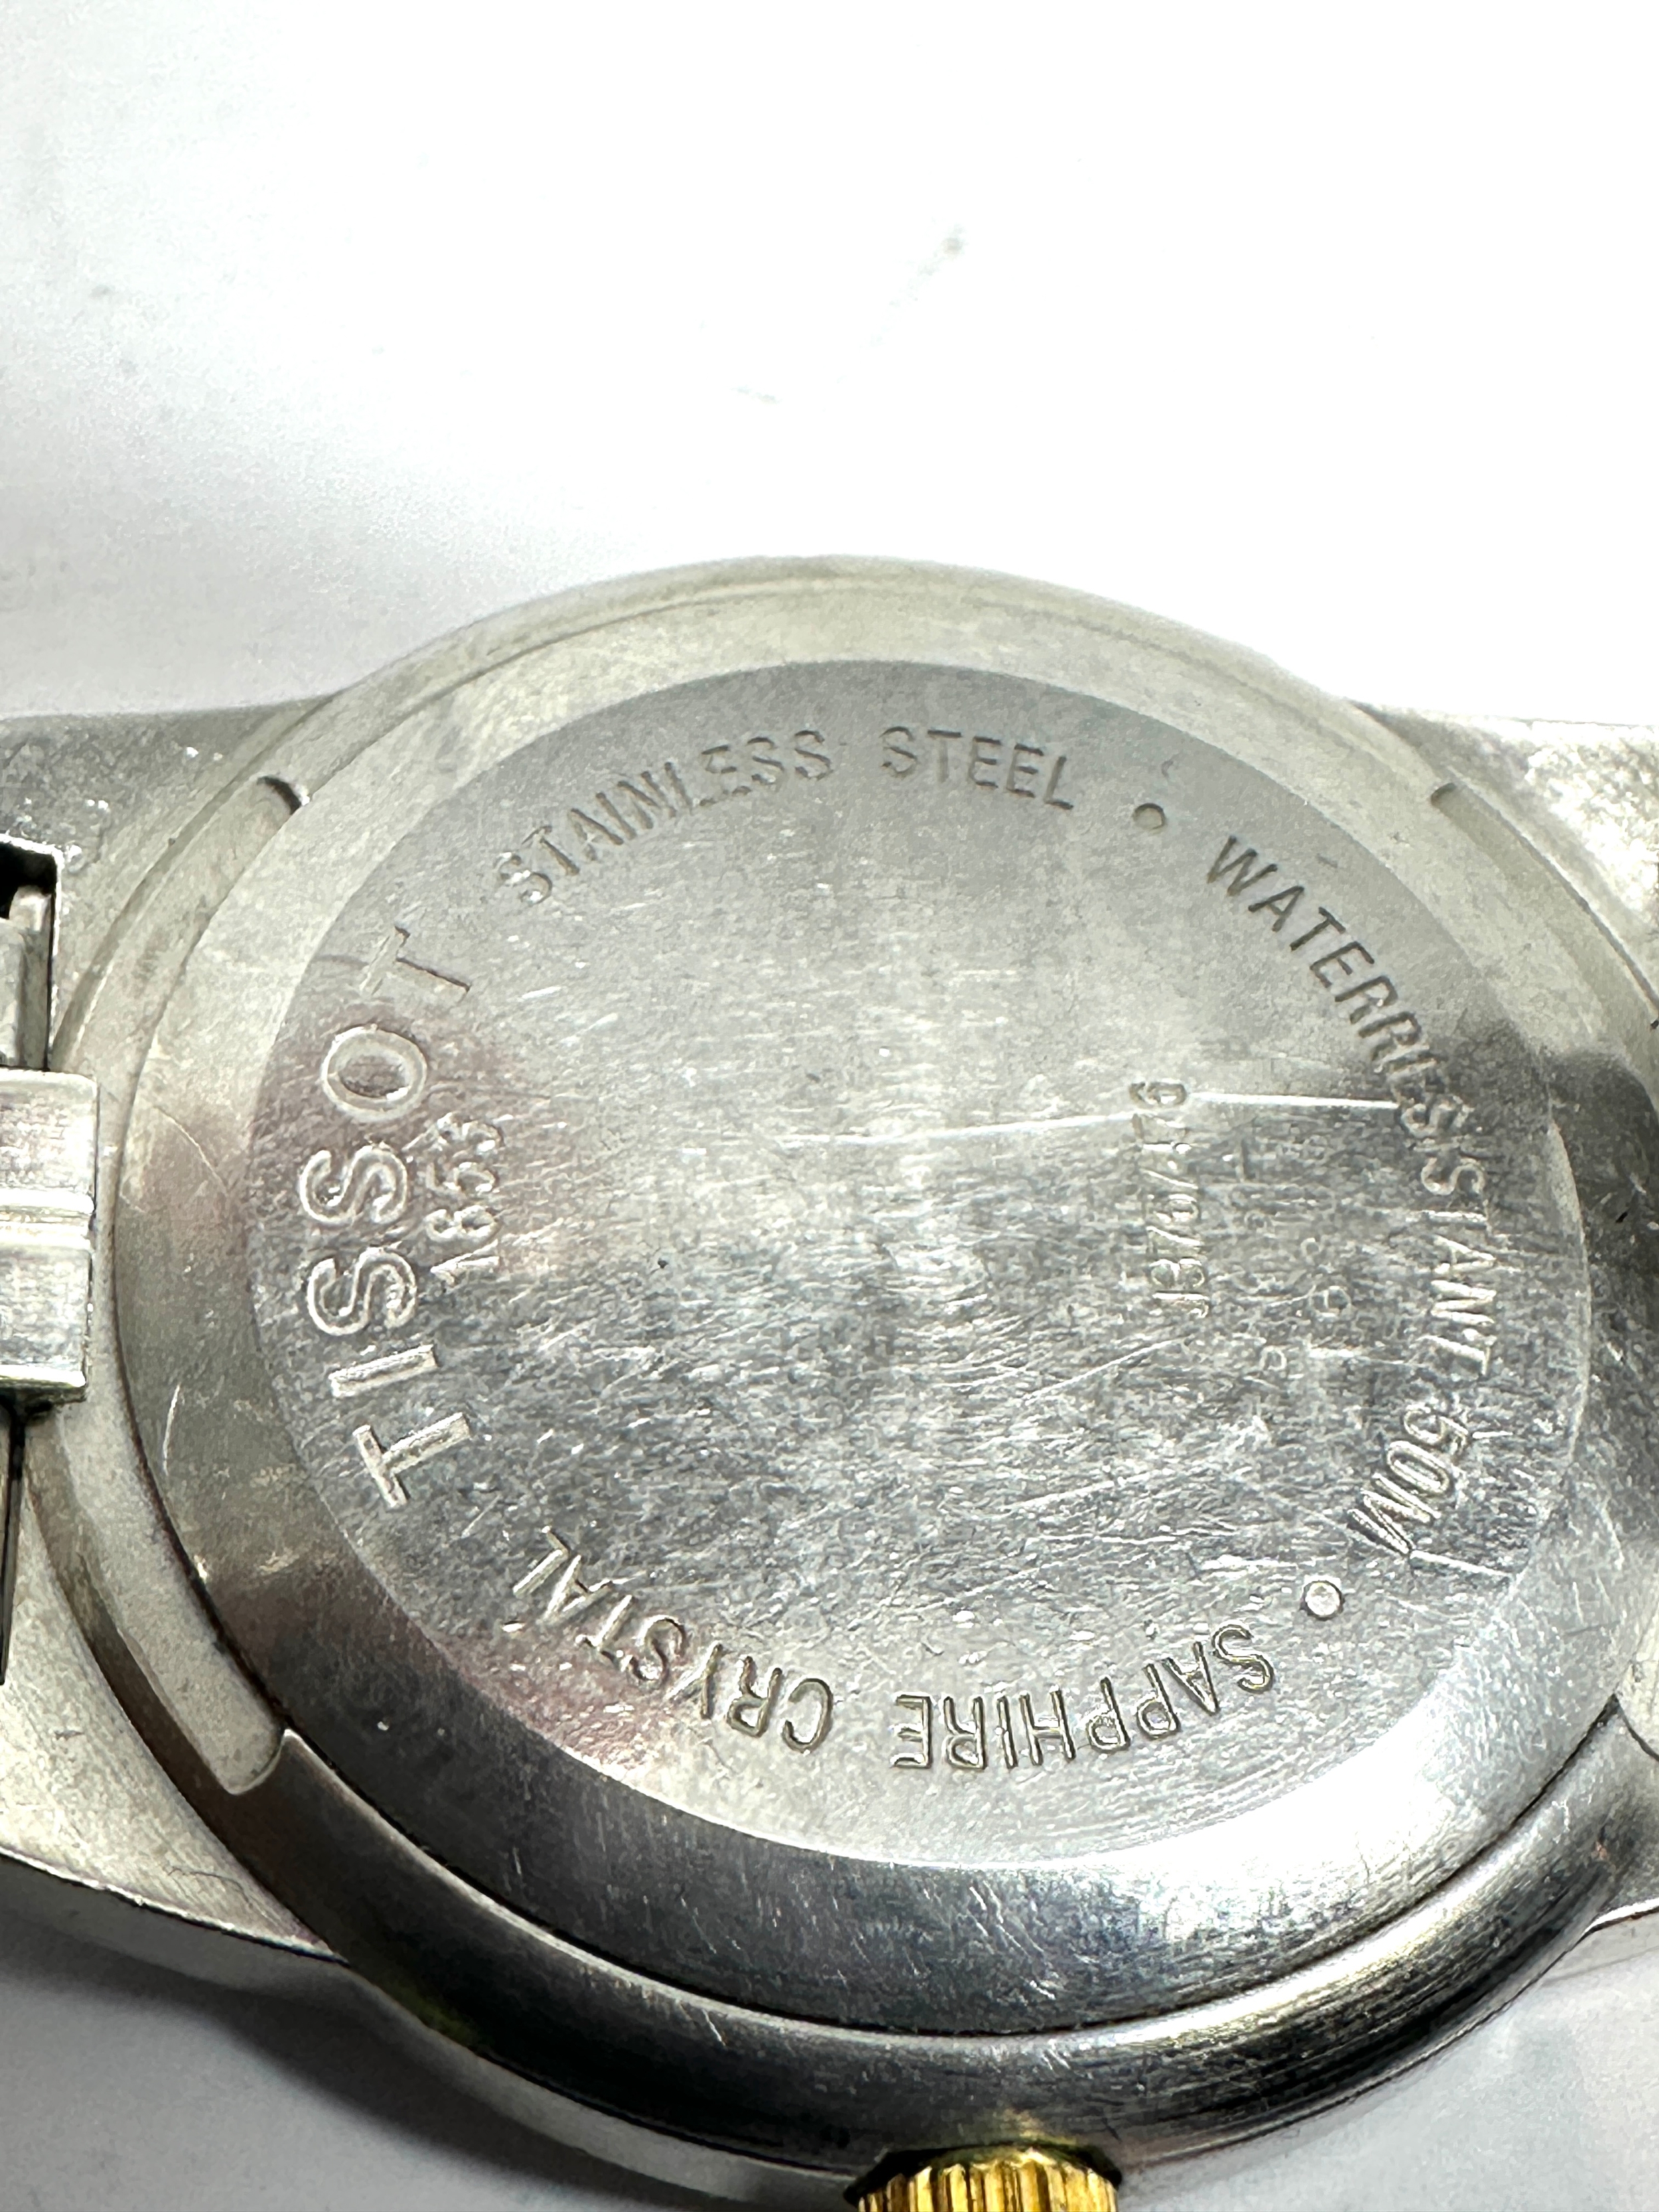 Gentys Tissot 1853 pr50 quartz wristwatch j376/476 the watch is ticking - Image 4 of 4